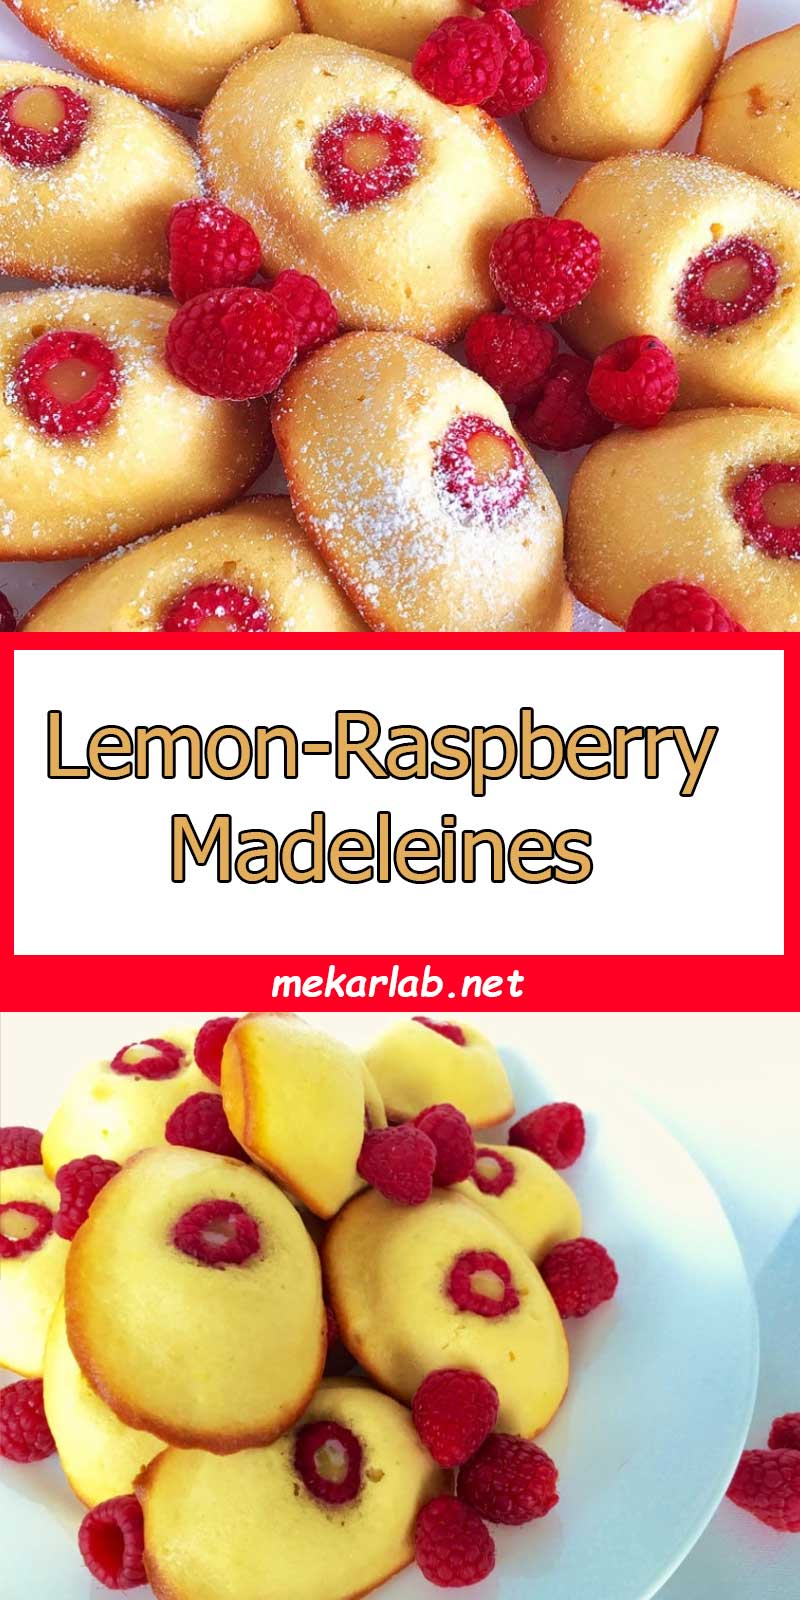 Lemon-Raspberry Madeleines